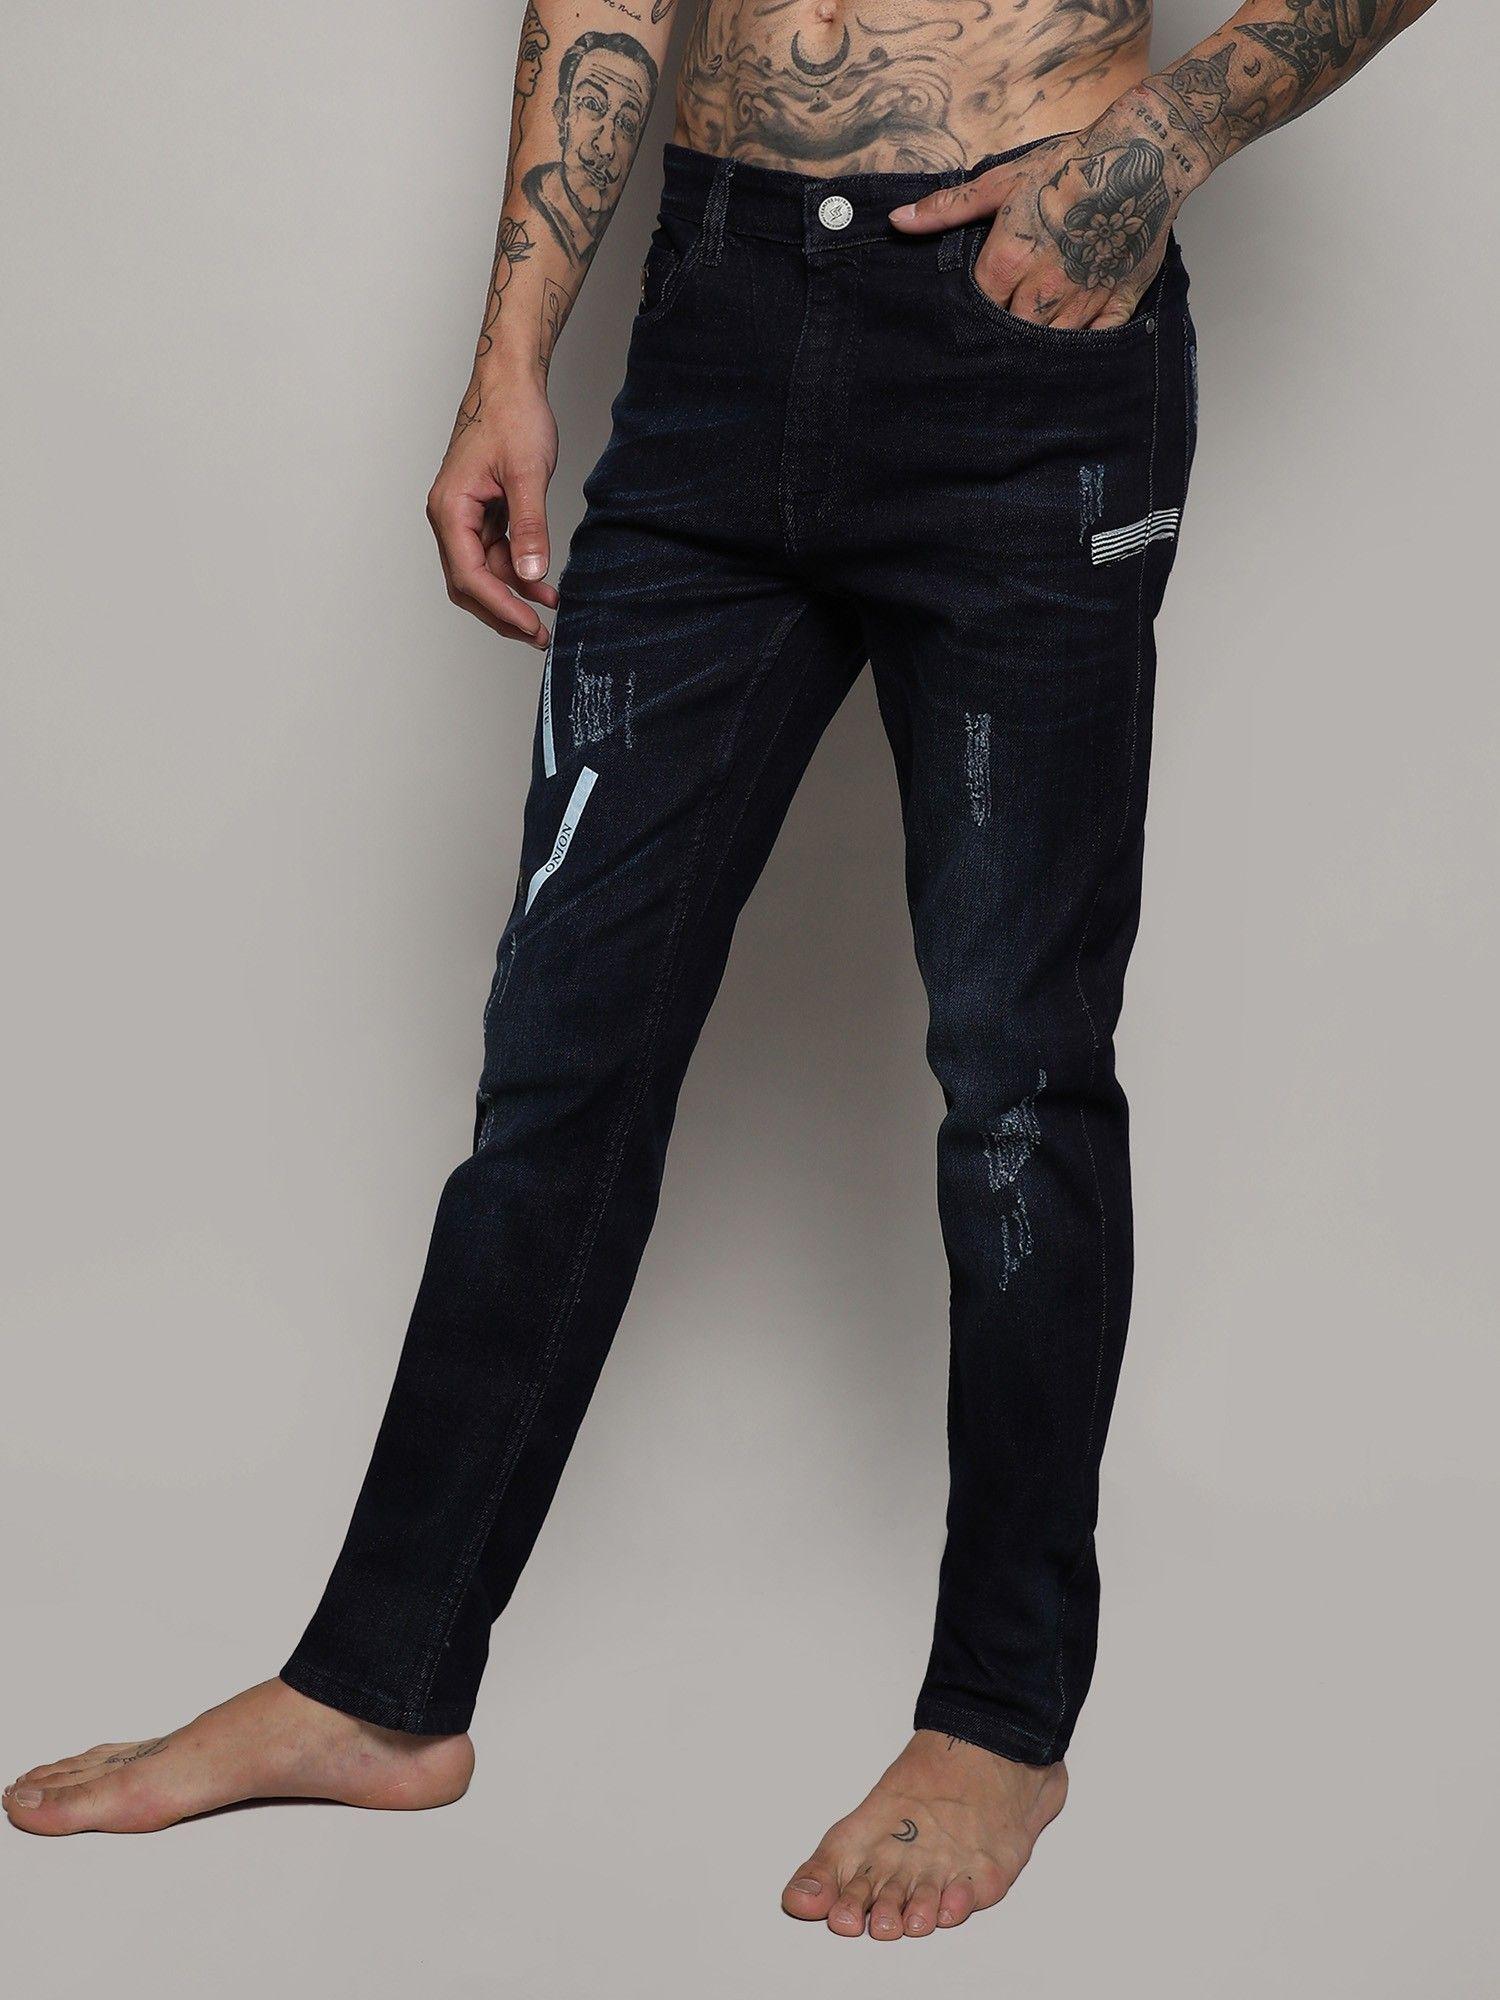 mens dark wash distressed denim jeans with embroidered details